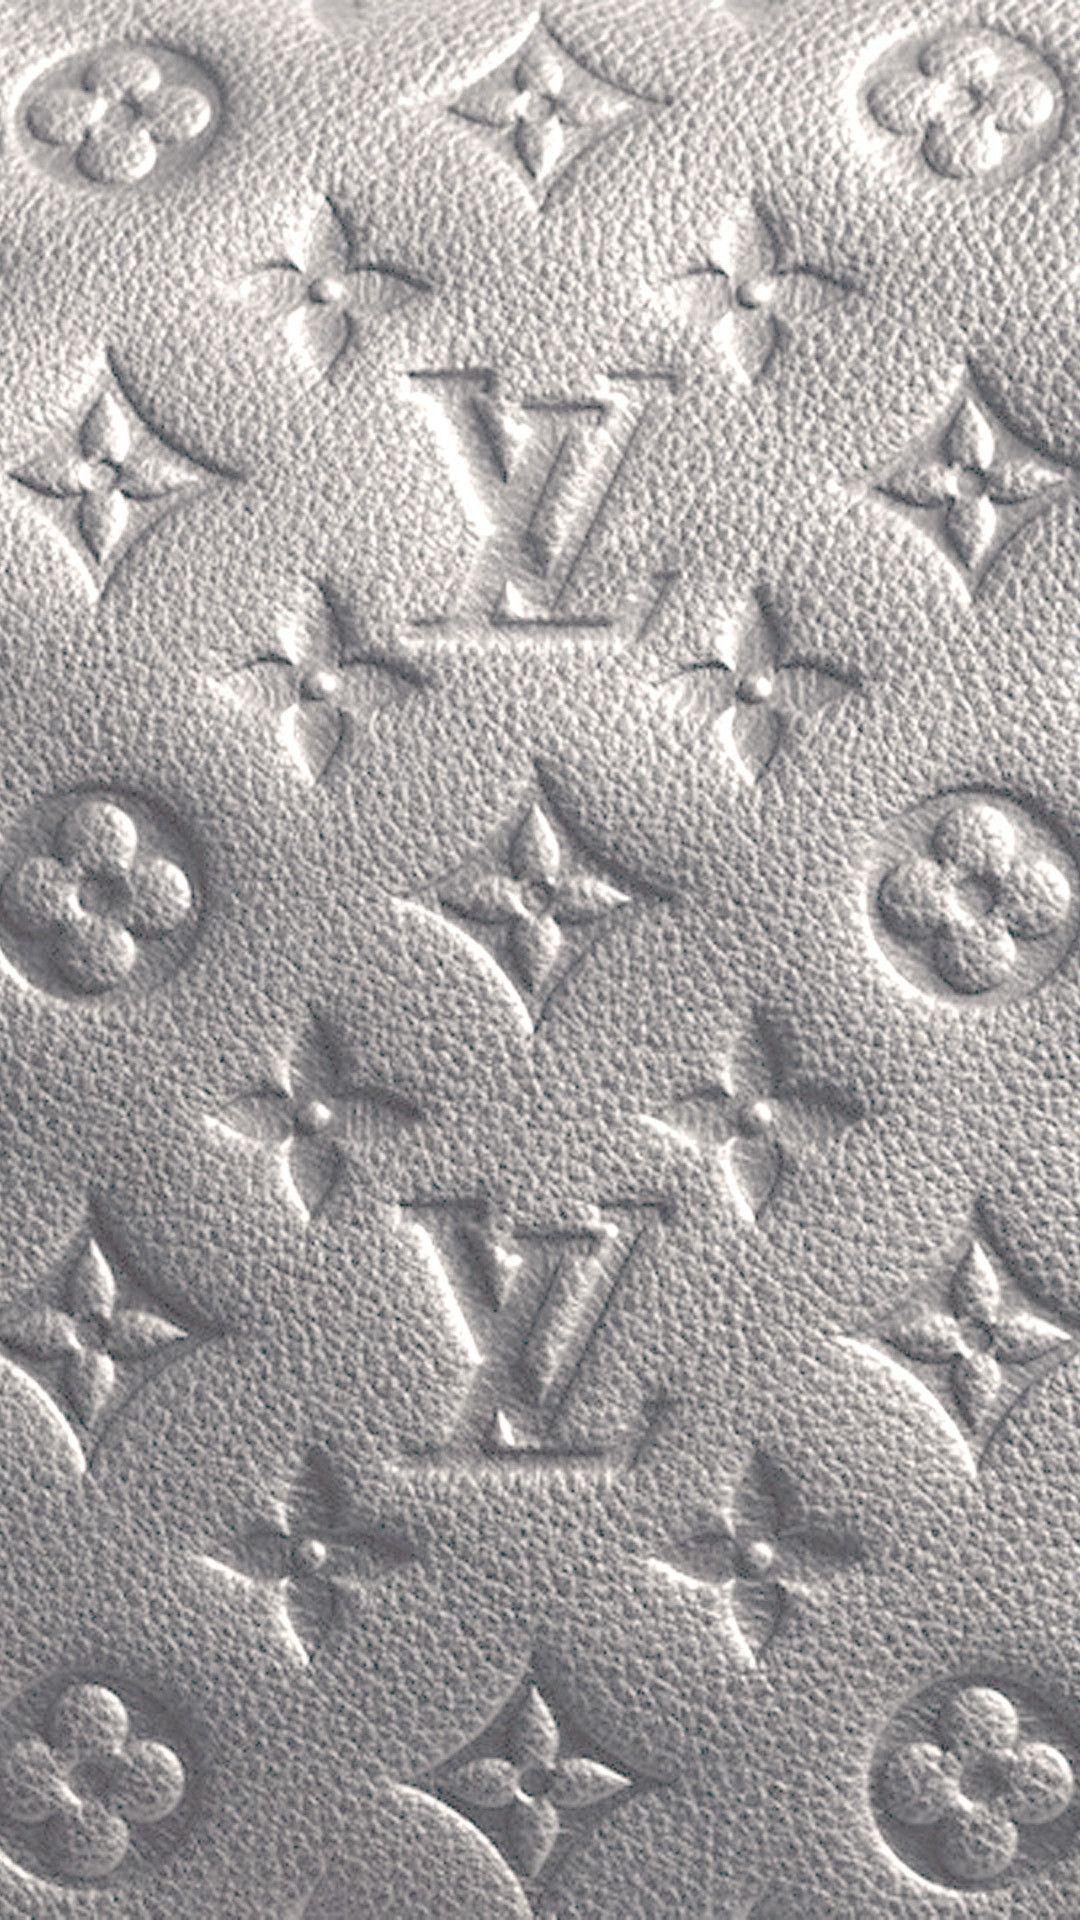 Free download the Louis Vuitton Print wallpaper ,beaty your iphone . #logo # print #flower…